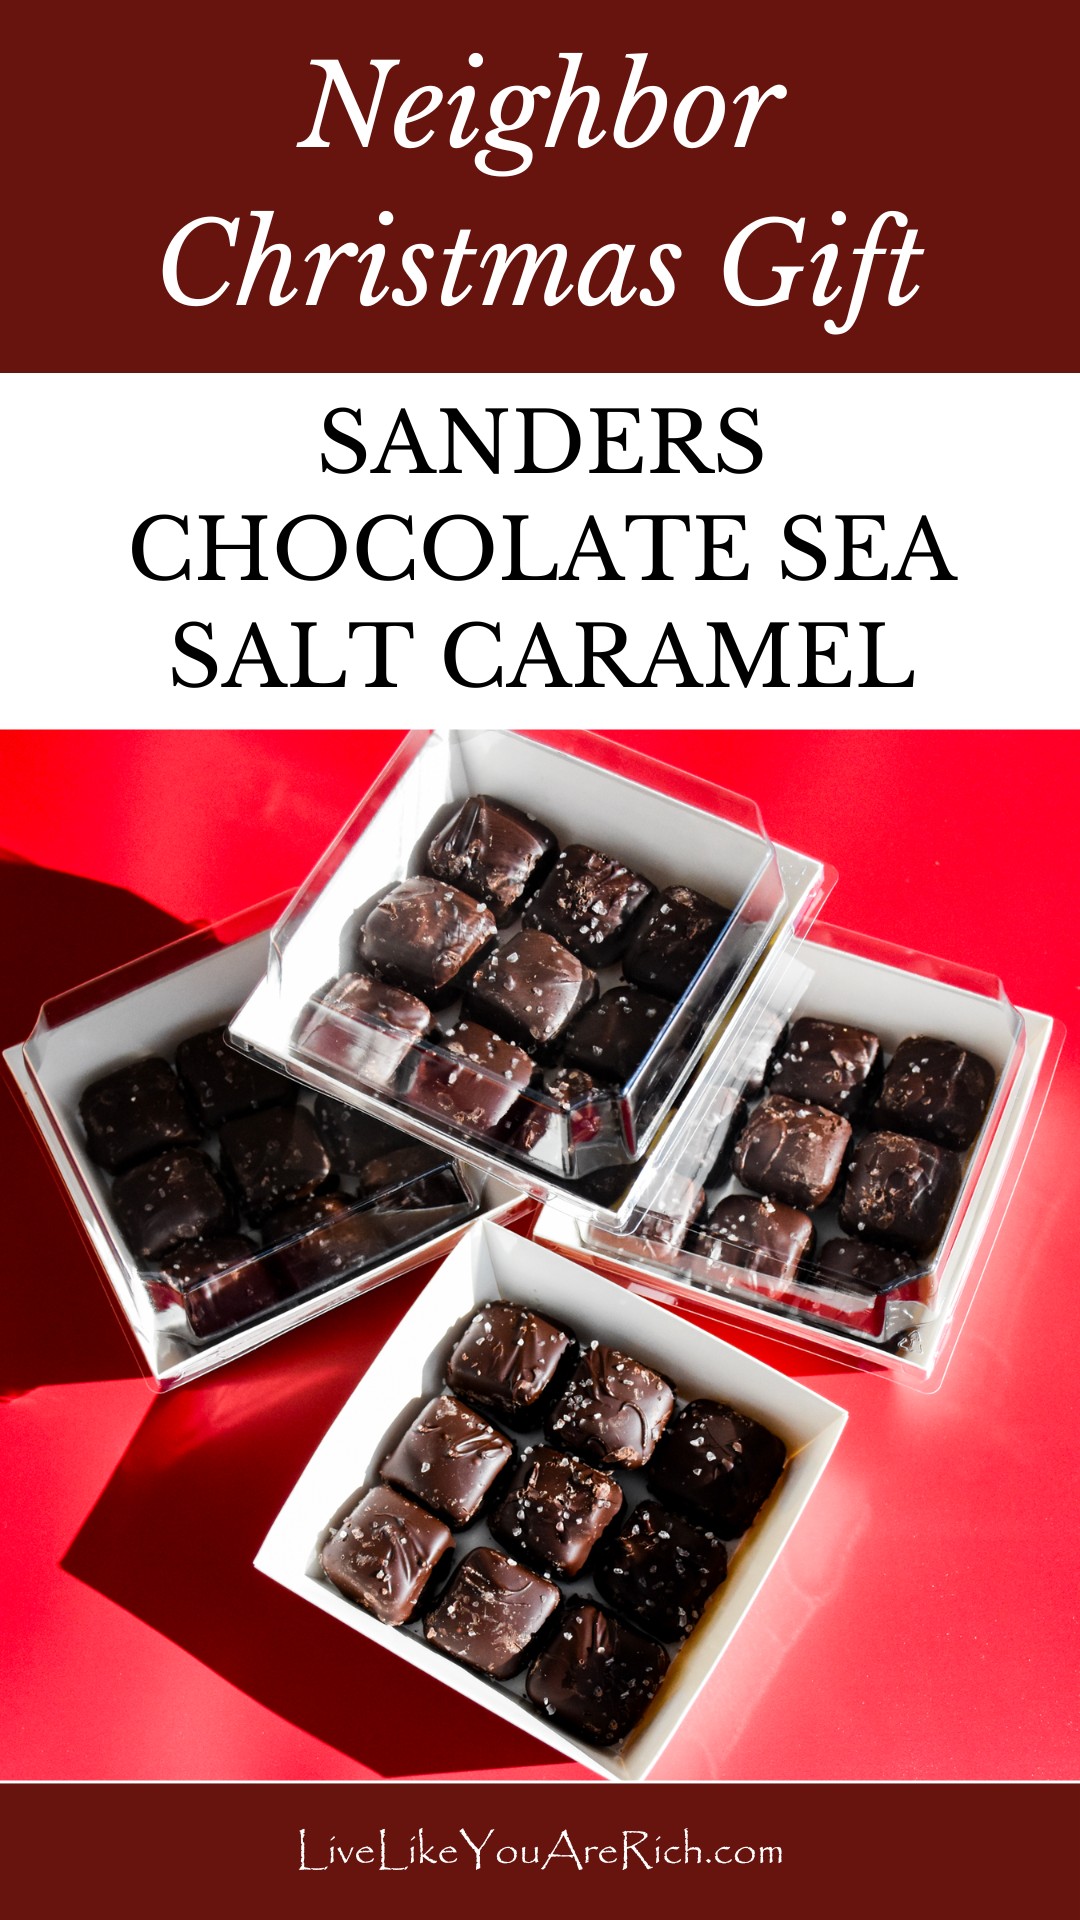 Neighbor Christmas Gift: Sanders Chocolate Sea Salt Caramel